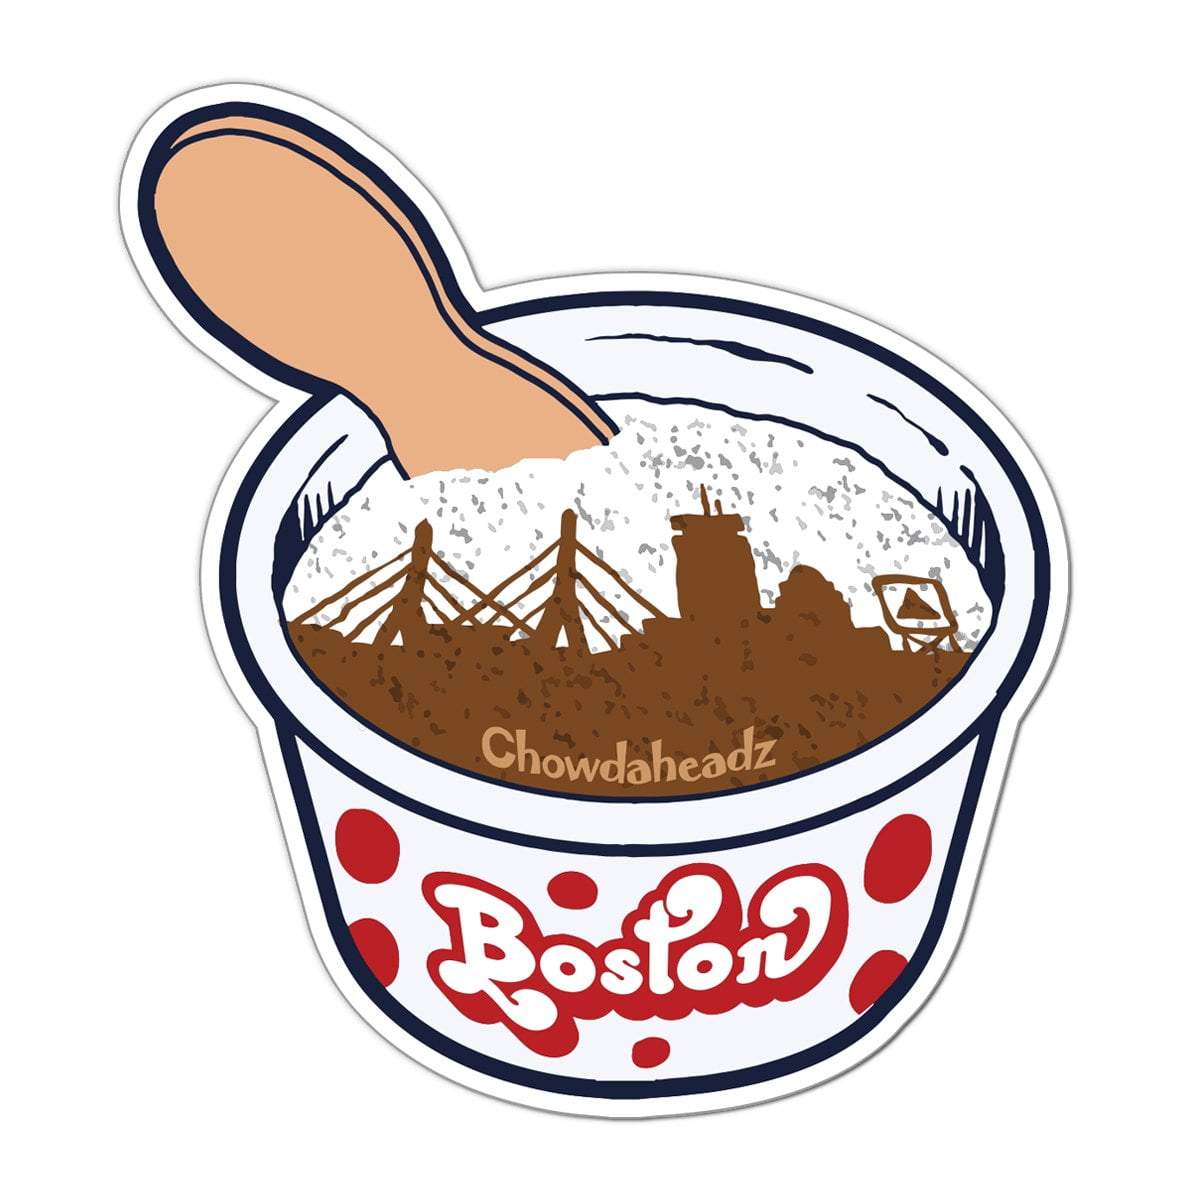 Boston Ice Cream Cup Sticker Chowdaheadz